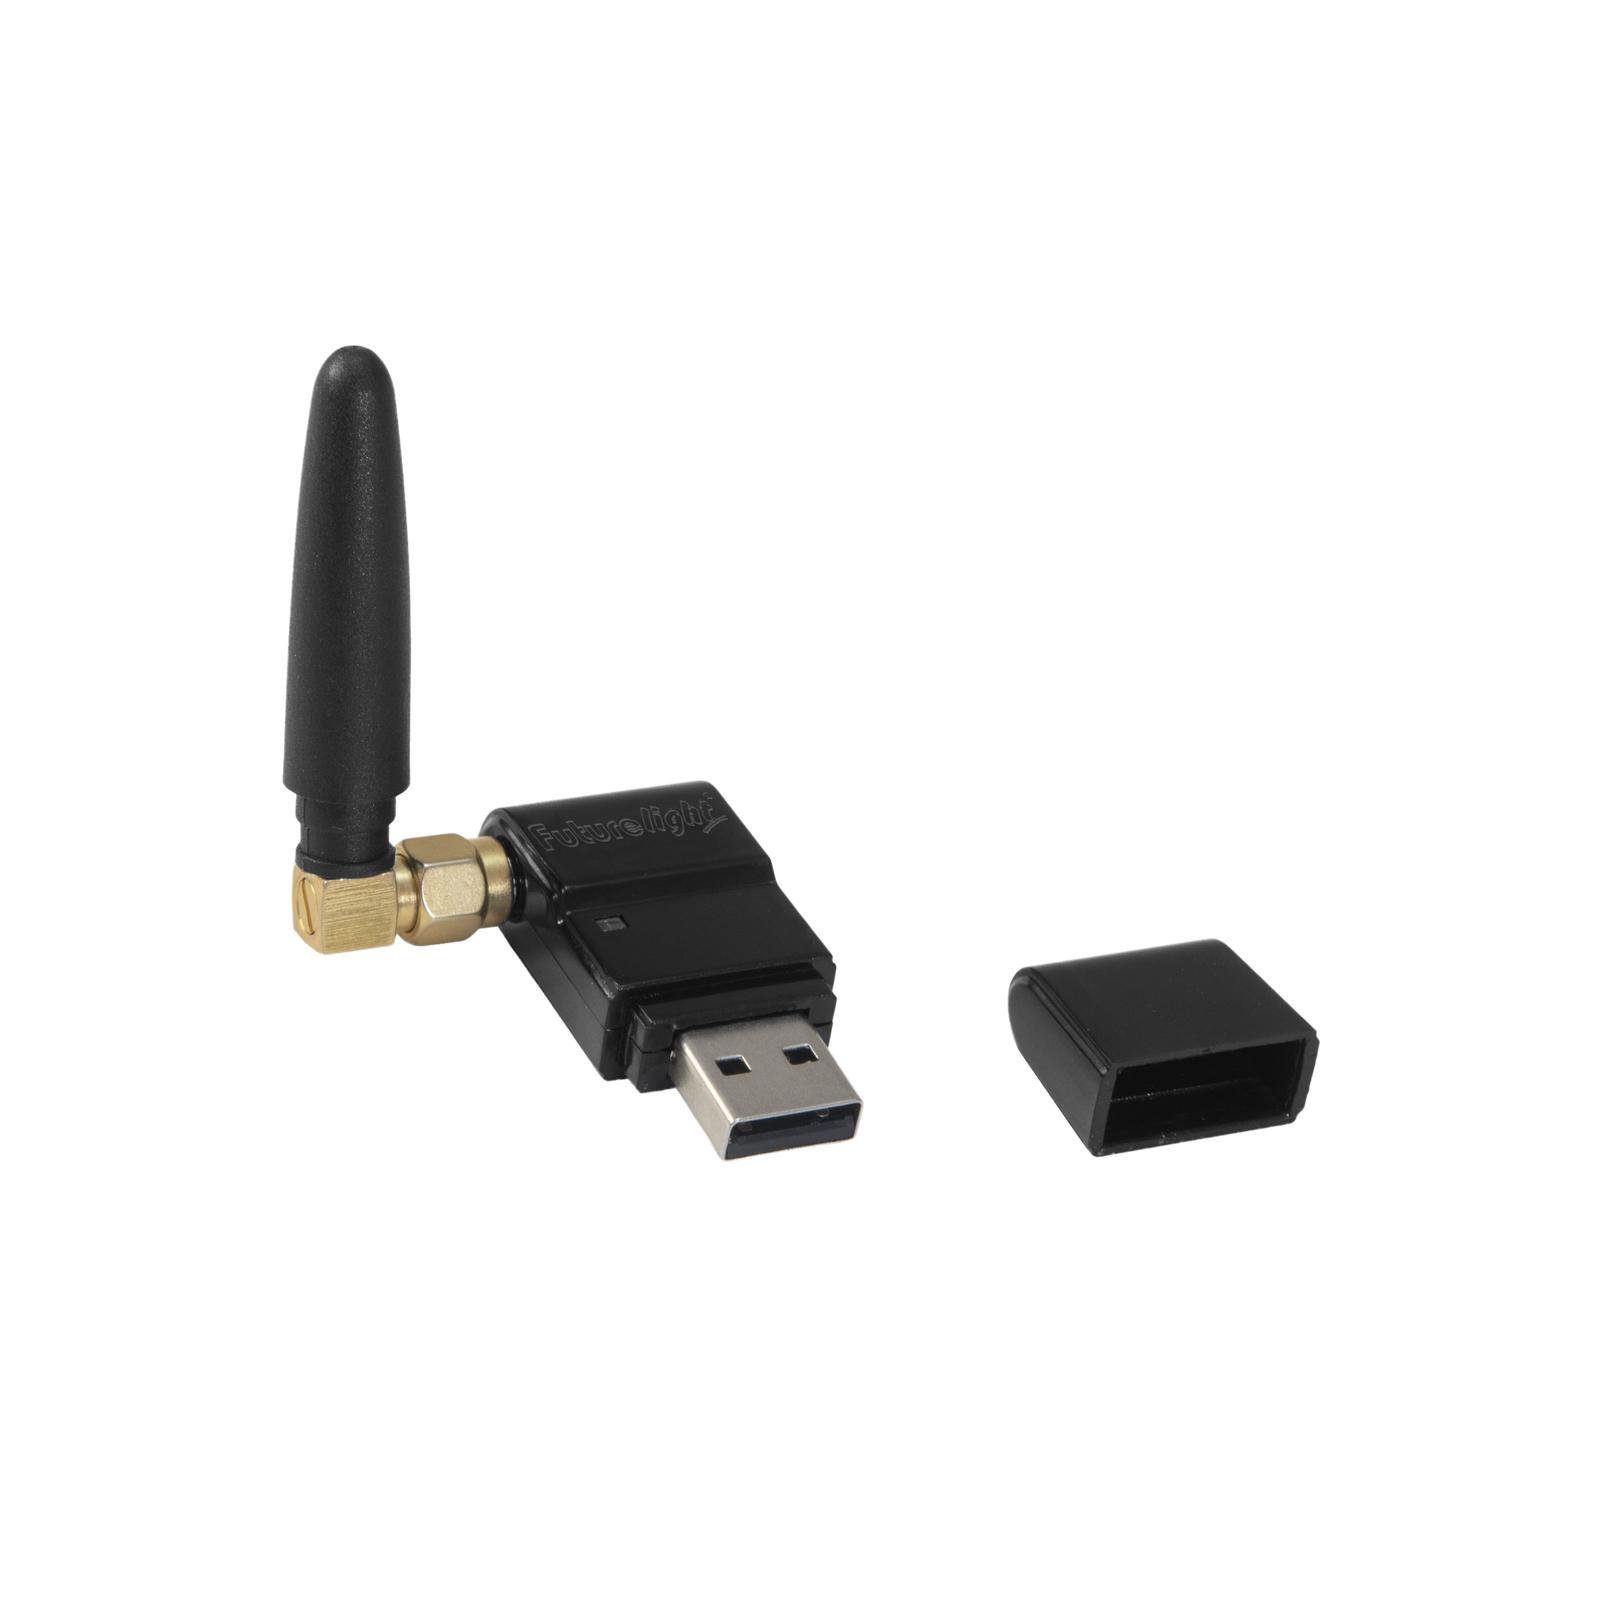 FUTURELIGHT WDR USB Wireless DMX Receiver